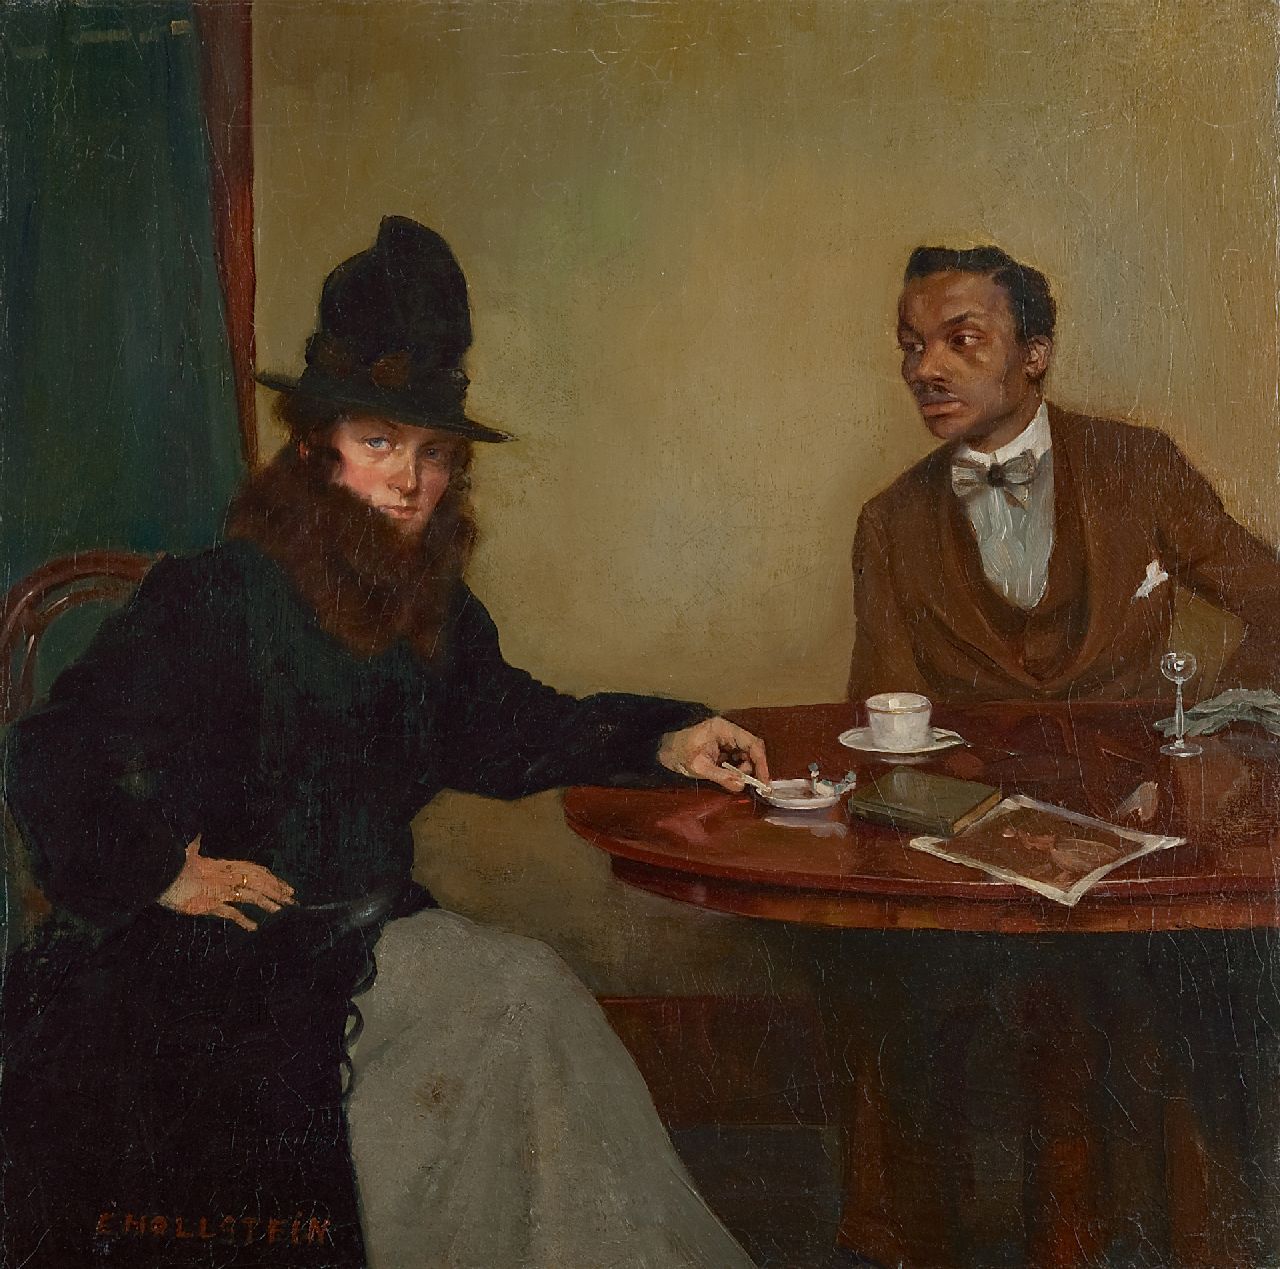 Hollstein E.  | Erwin Hollstein, Café, Paris, oil on canvas 51.8 x 51.1 cm, signed l.l.